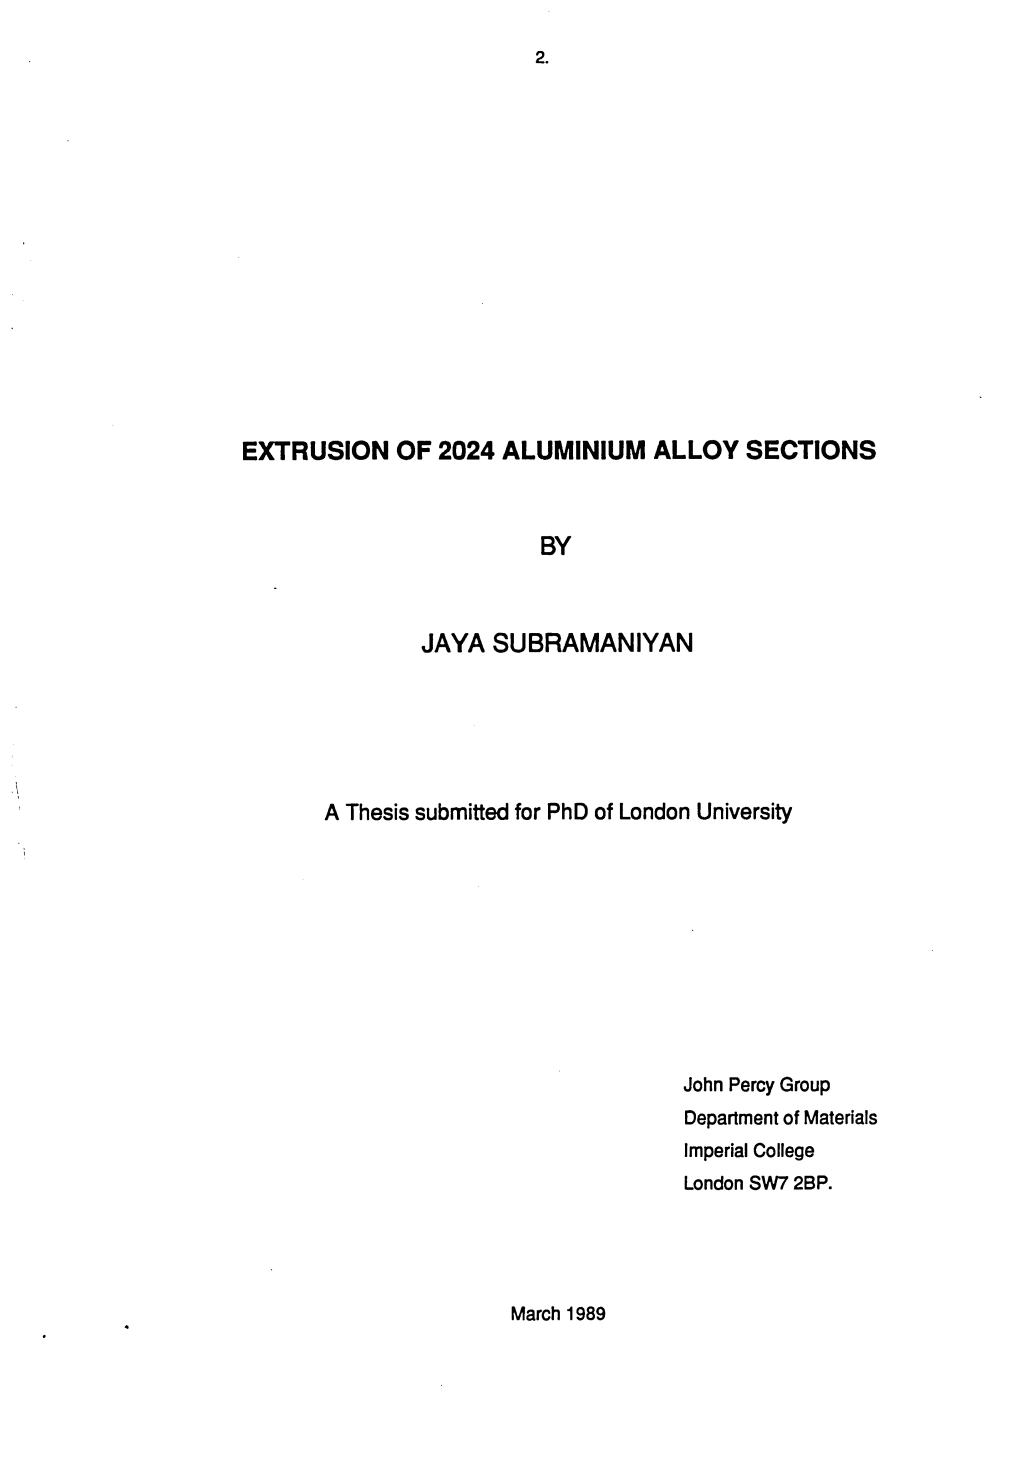 Extrusion of 2024 Aluminium Alloy Sections by Jaya